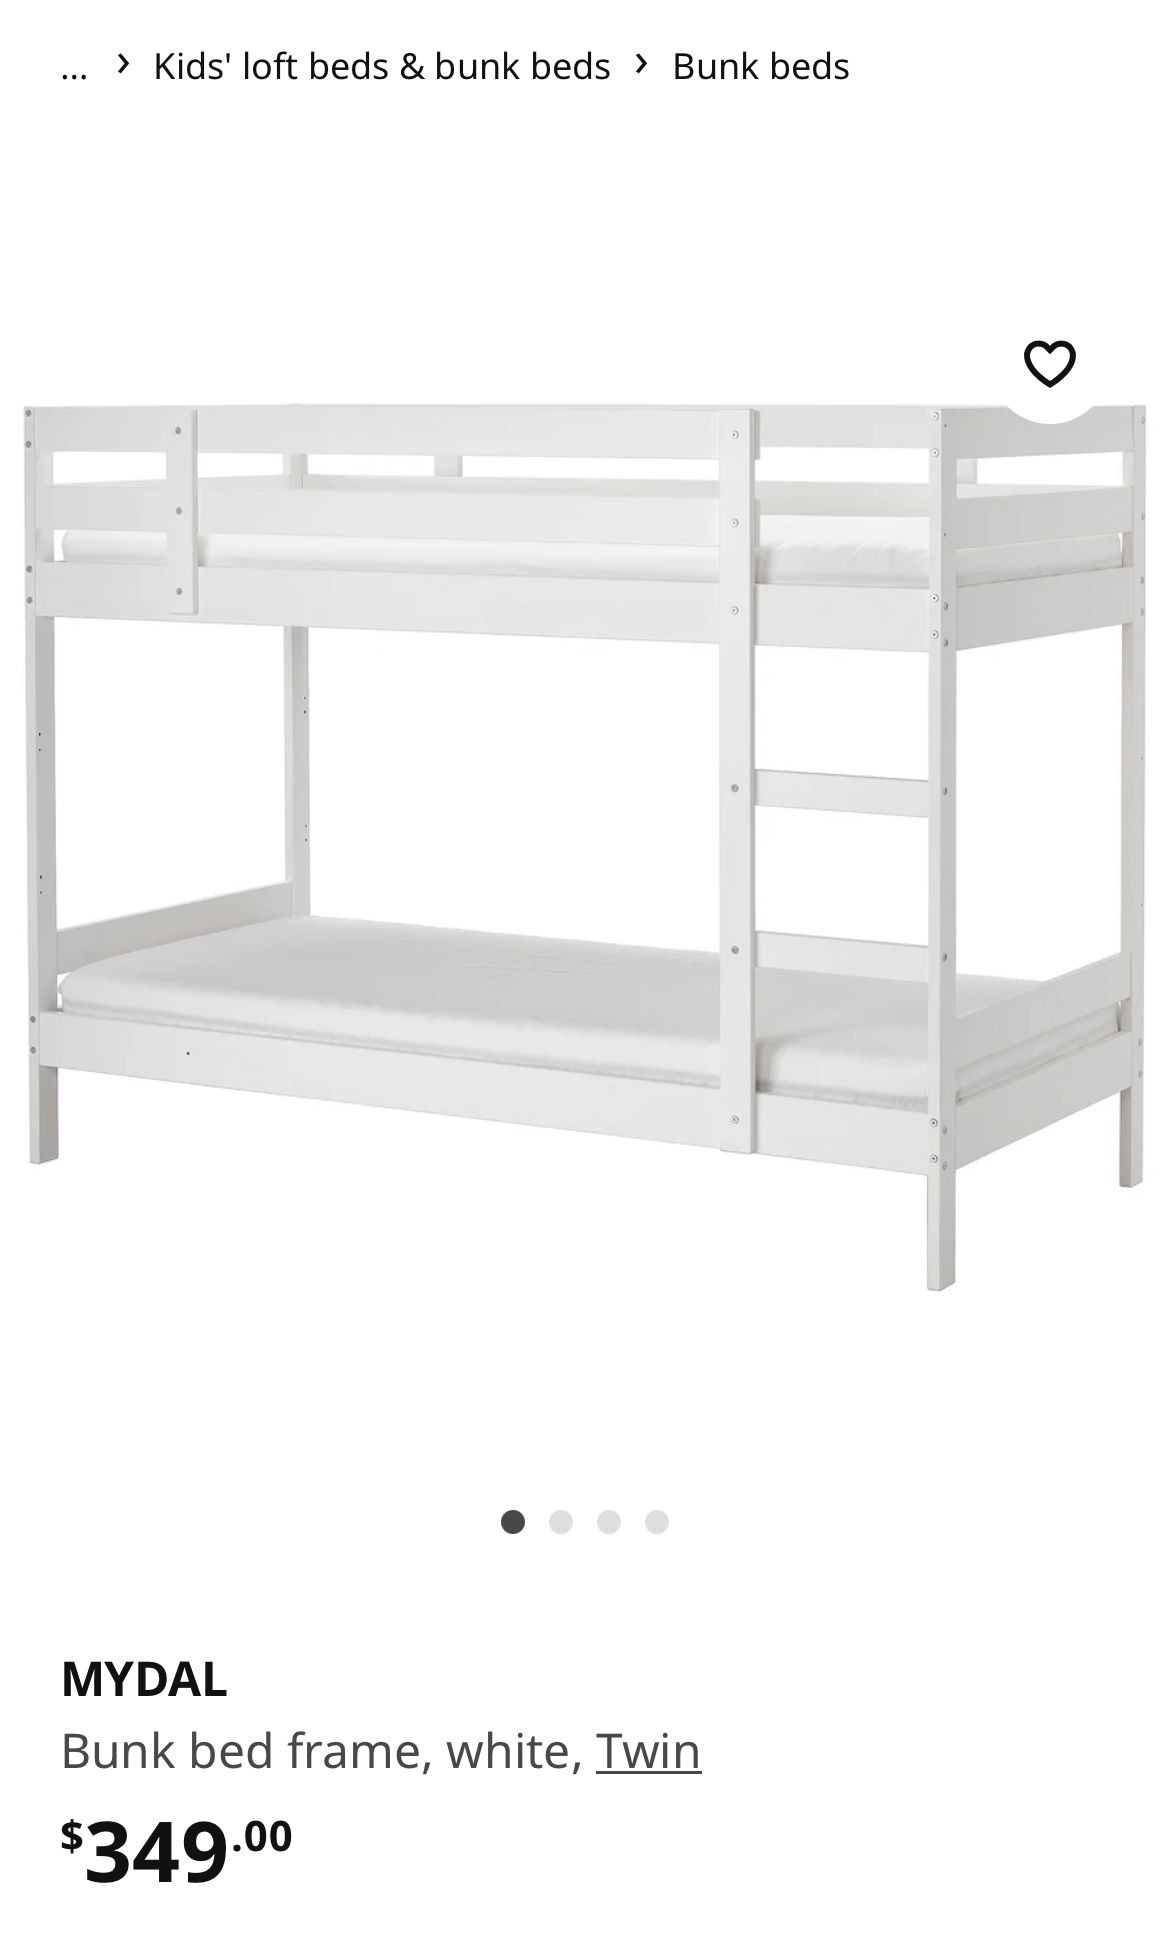 IKEA Twin Bunk Bed 